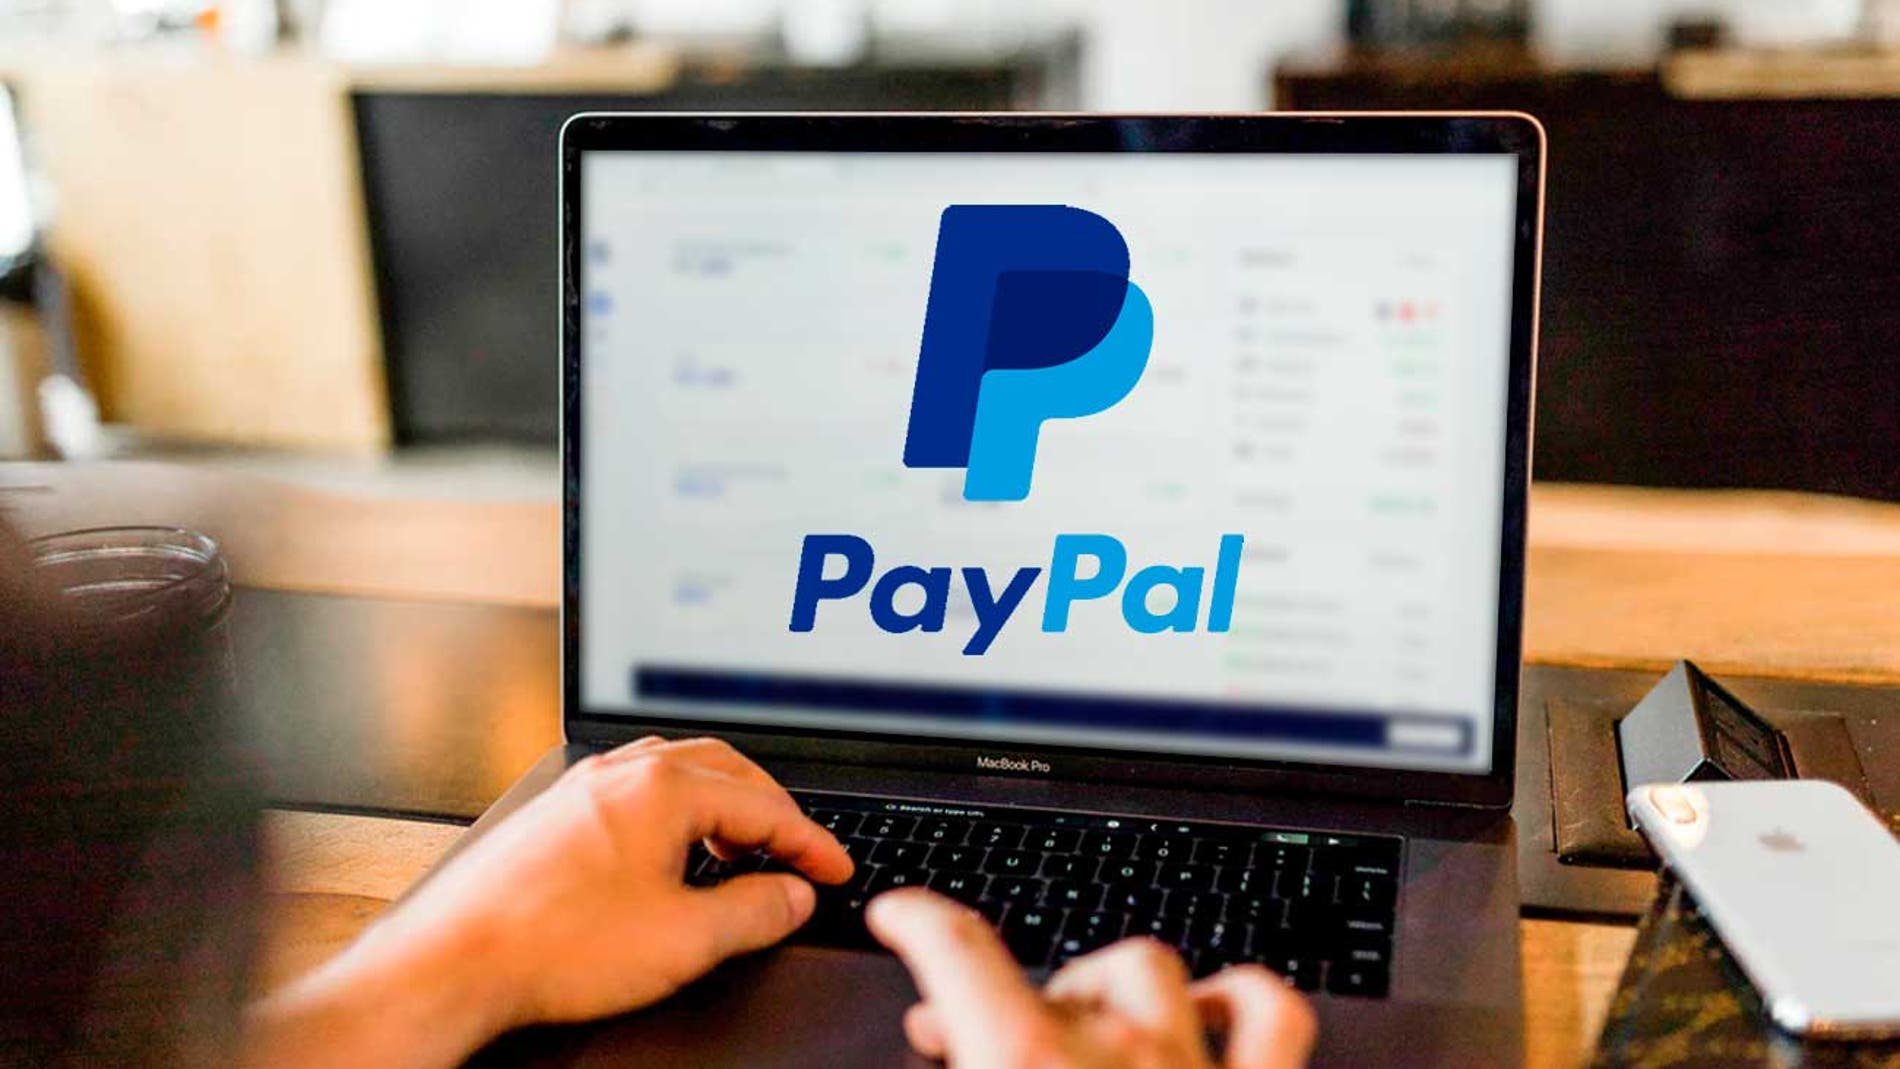 Evita pagos indeseados gracias a PayPal